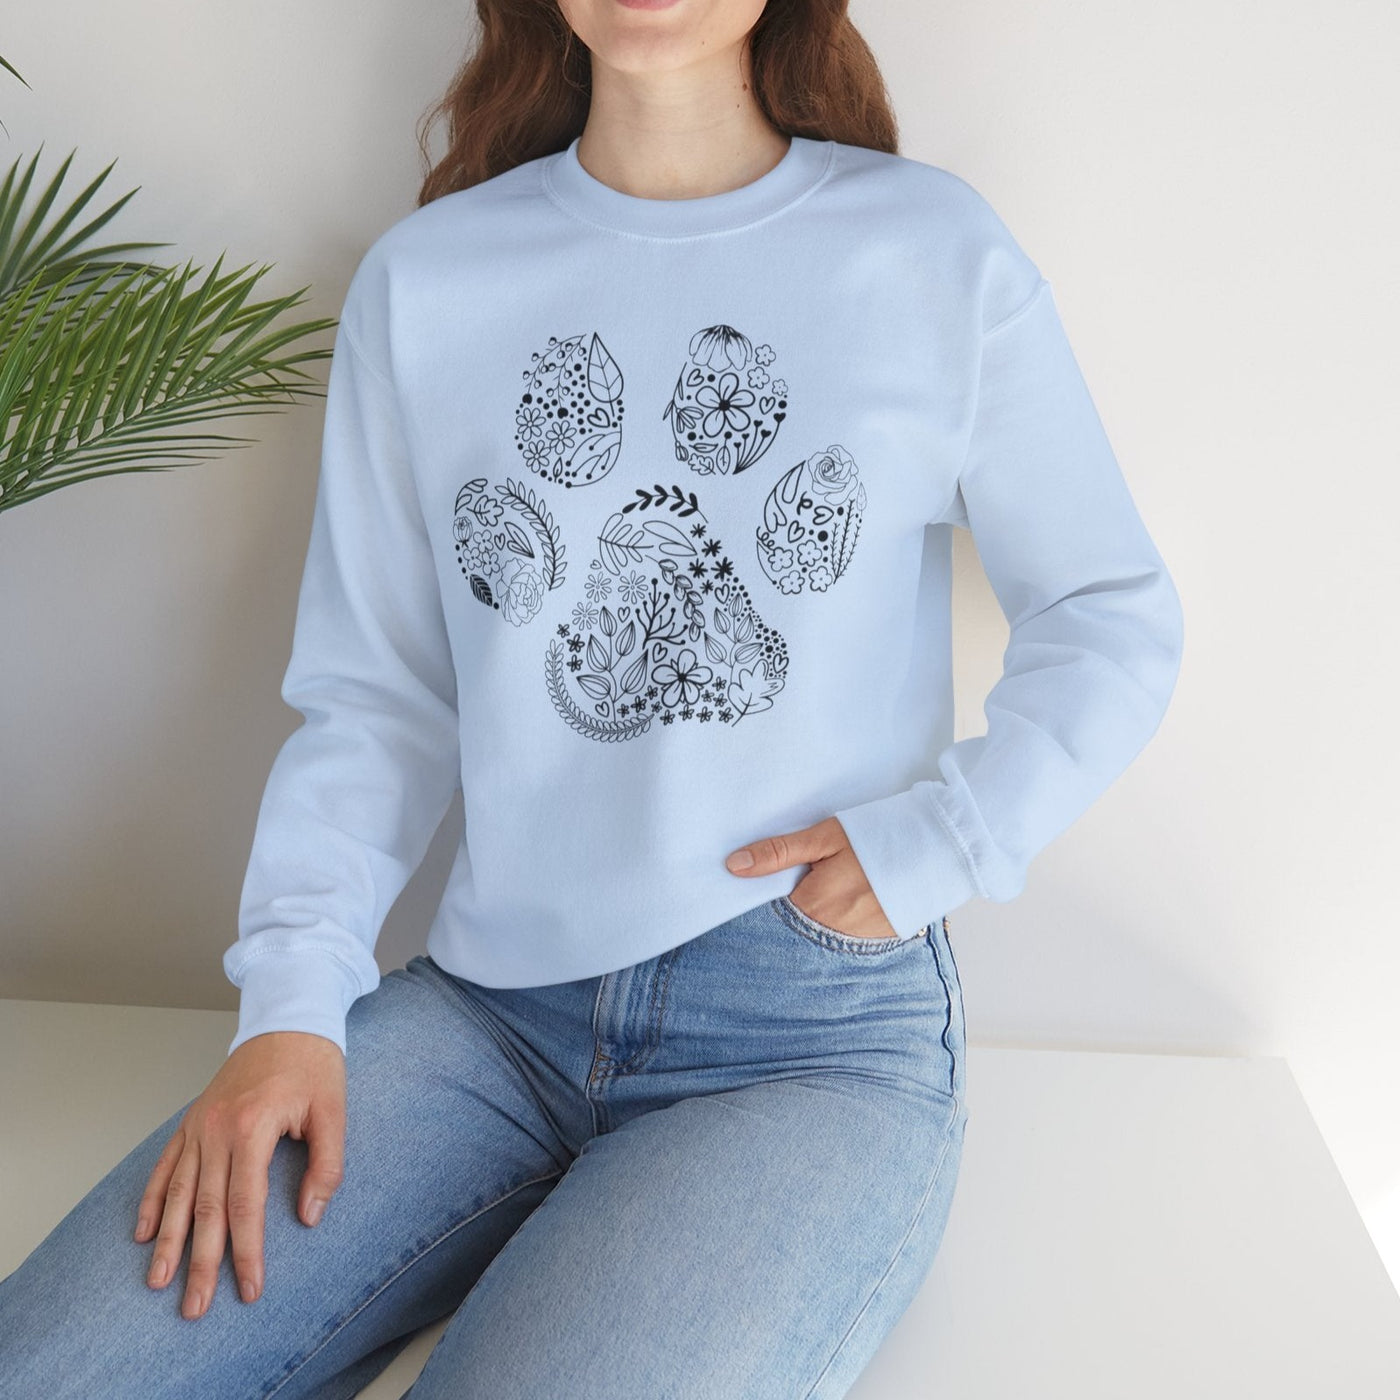 Floral Paw Sweatshirt - Rocking The Dog Mom Life